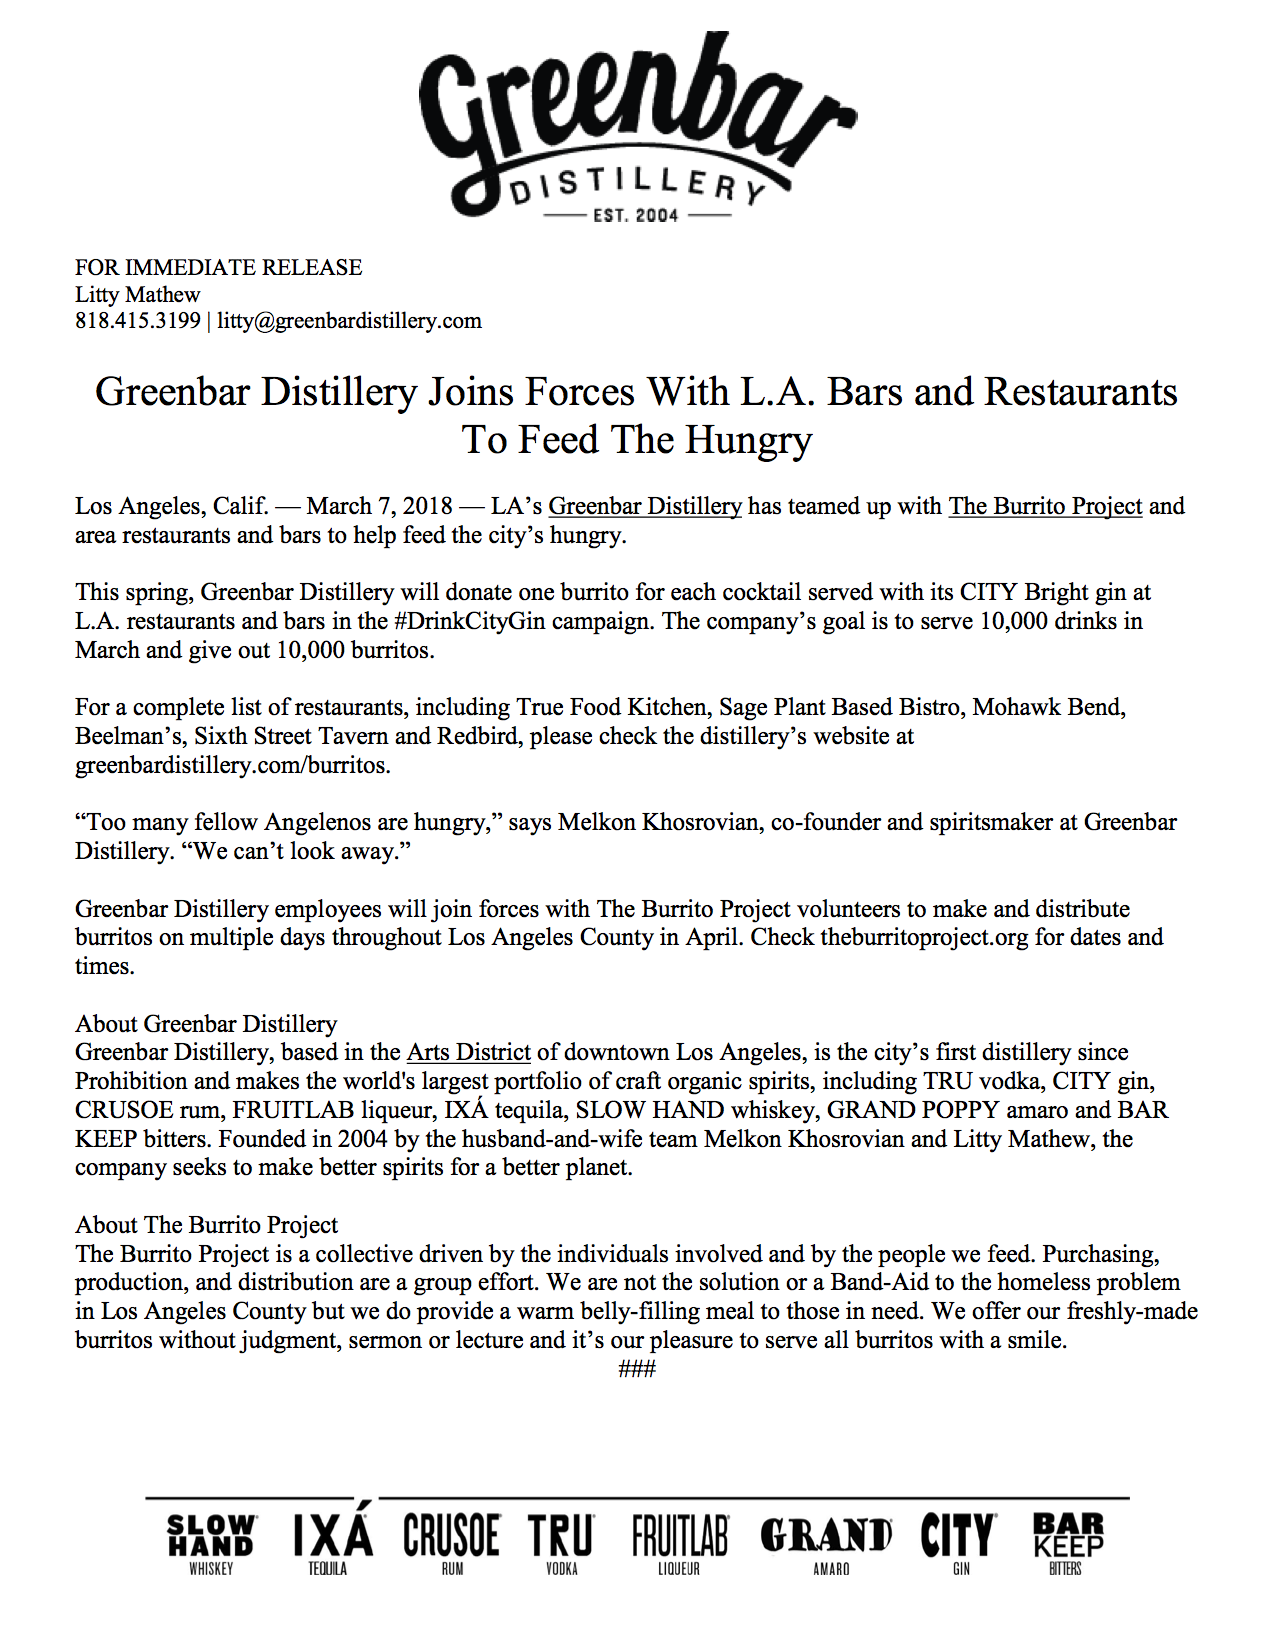 Greenbar Distillery Press Release